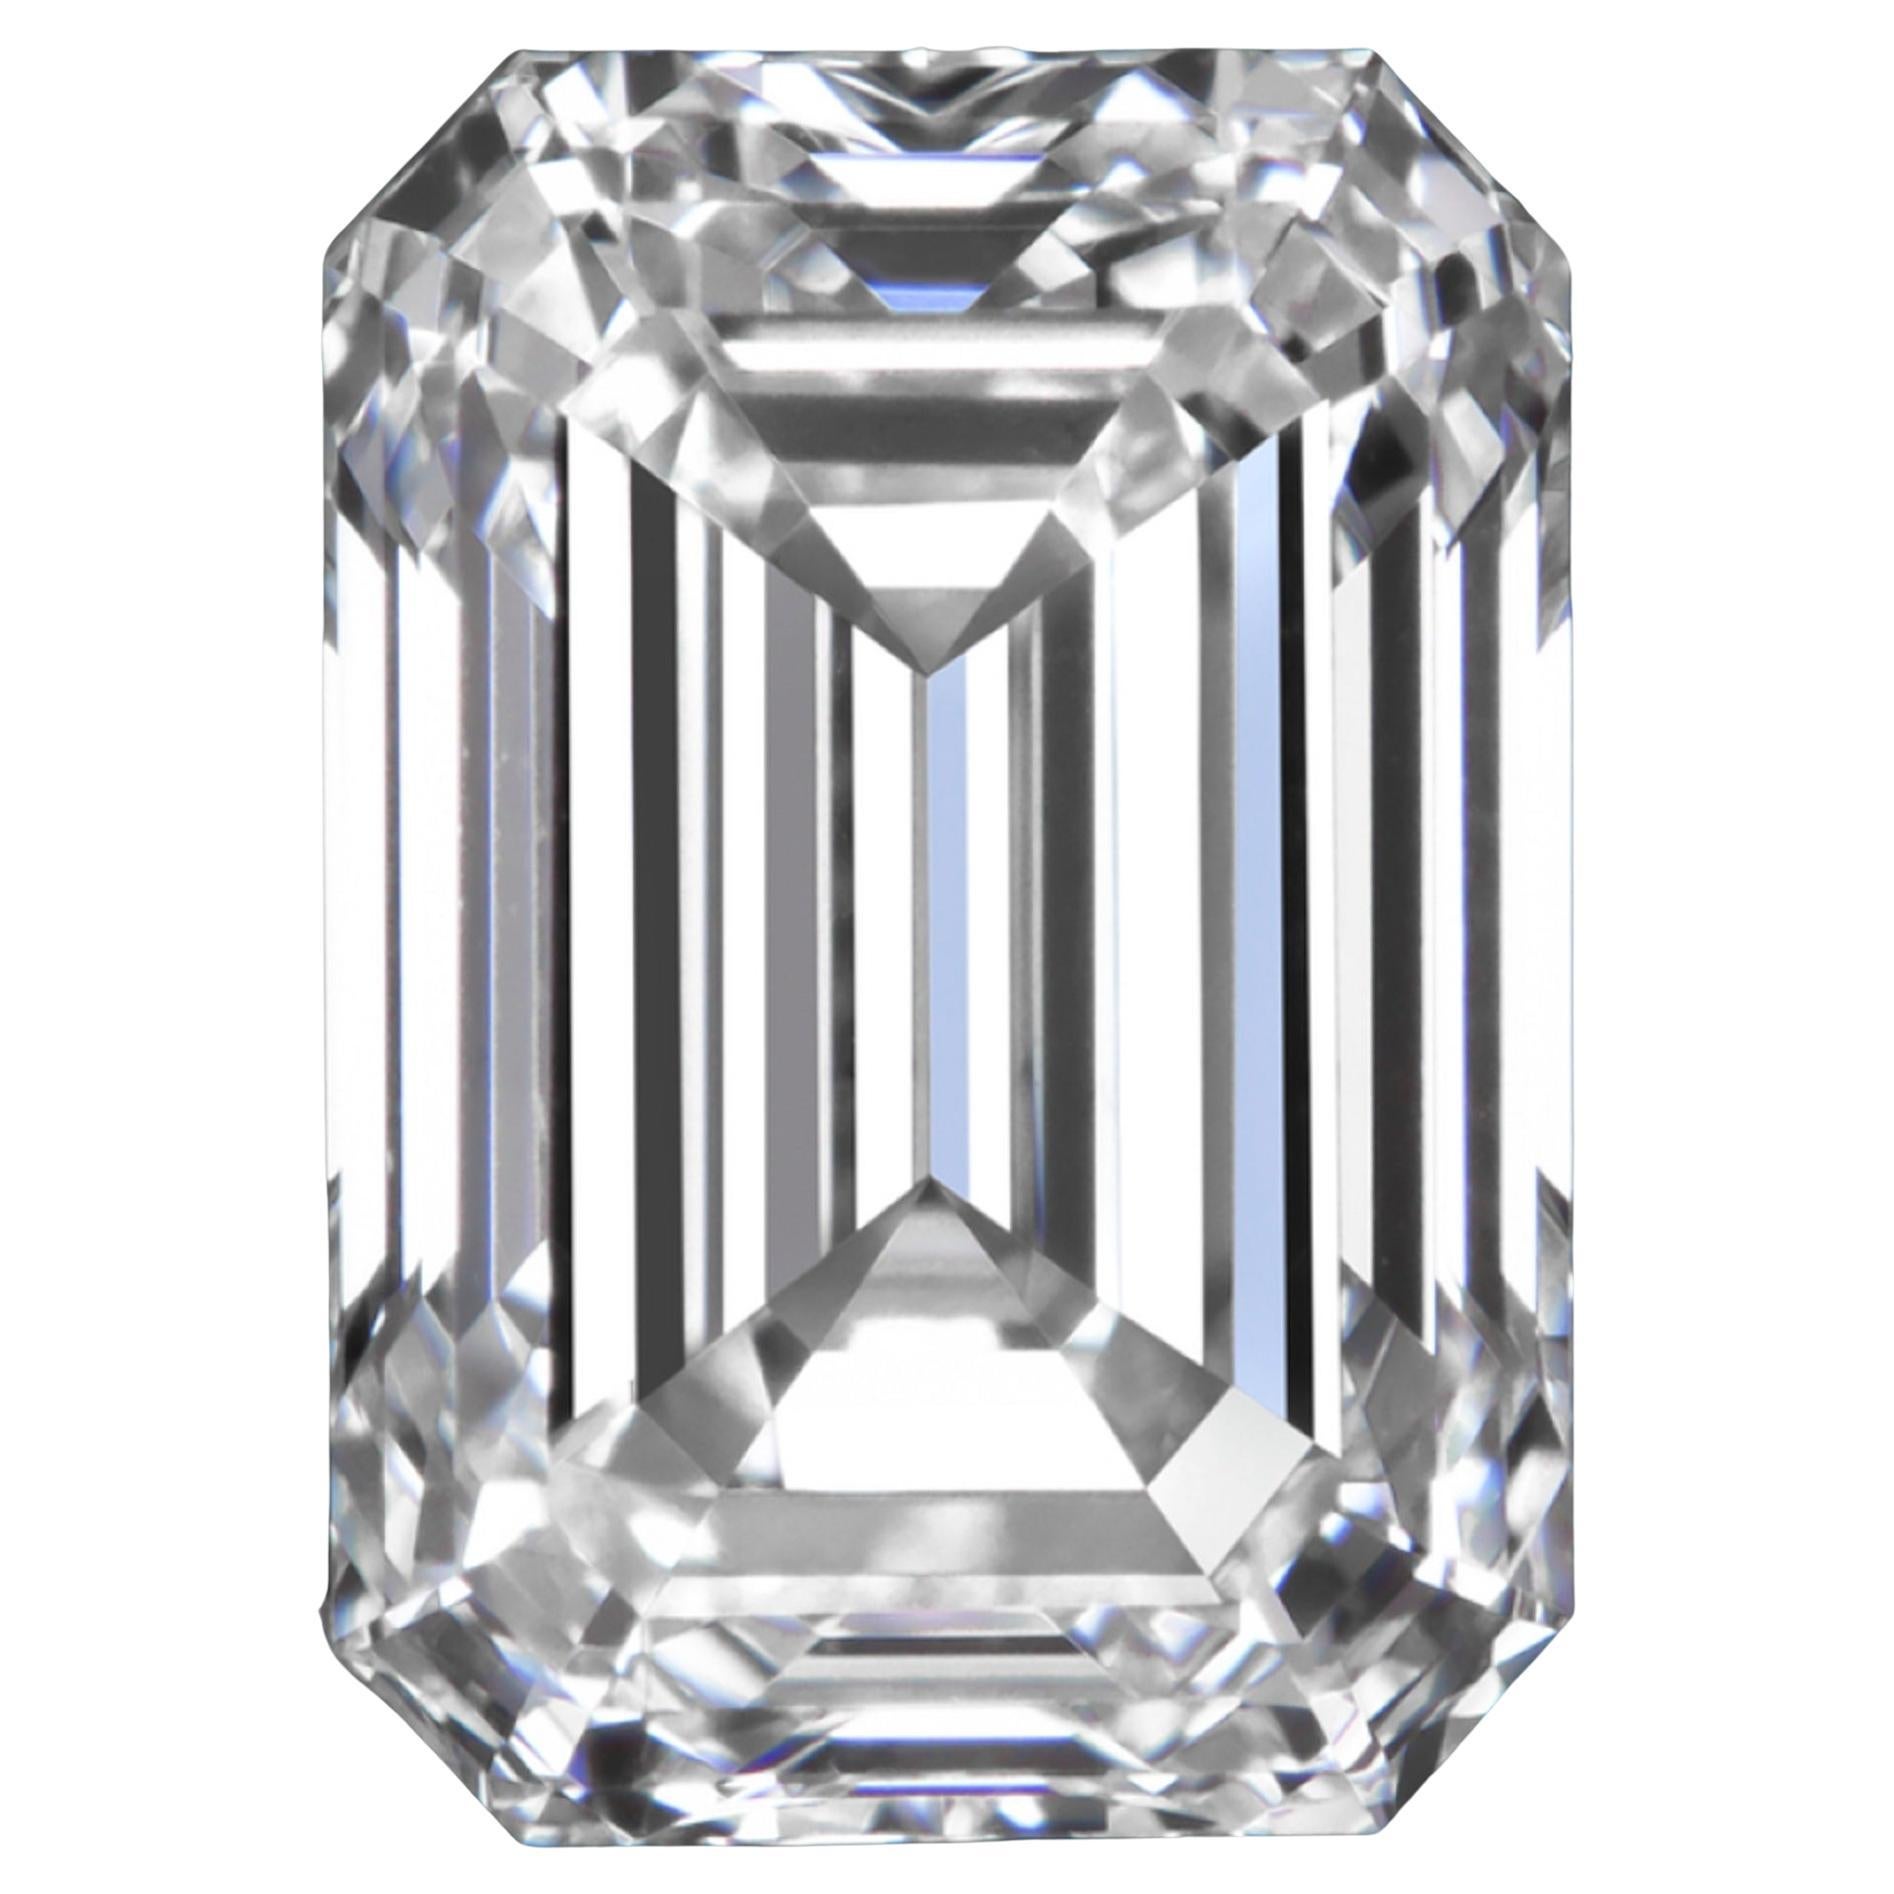 PERFECT Investment Grade 20 Carat Emerald Cut Diamond D Color 